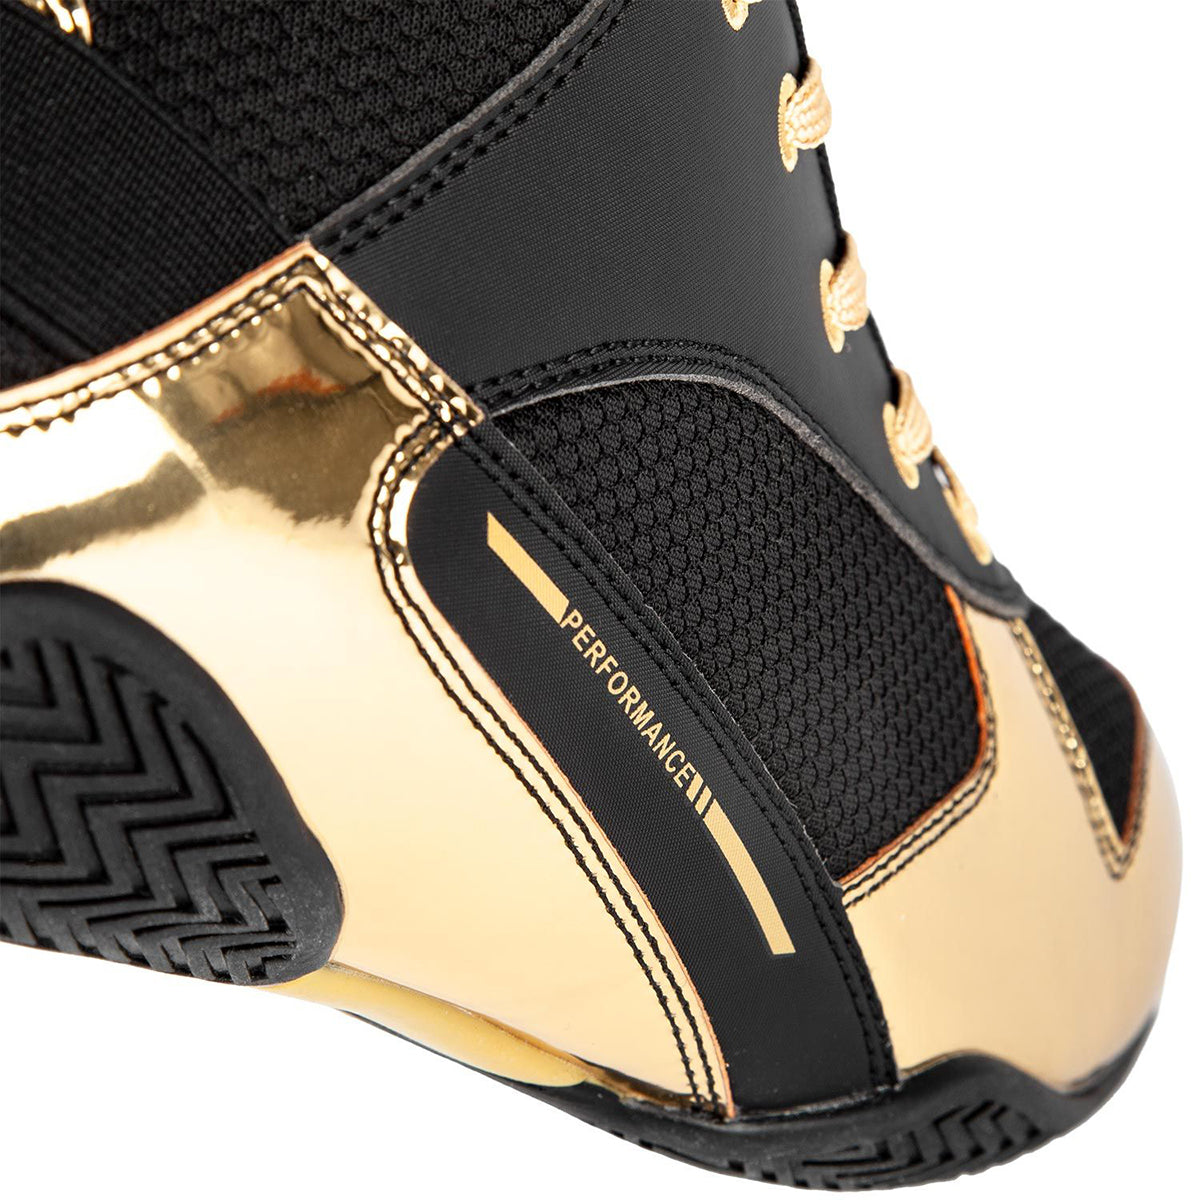 Venum Elite Professional Boxing Shoes - Black/Gold Venum